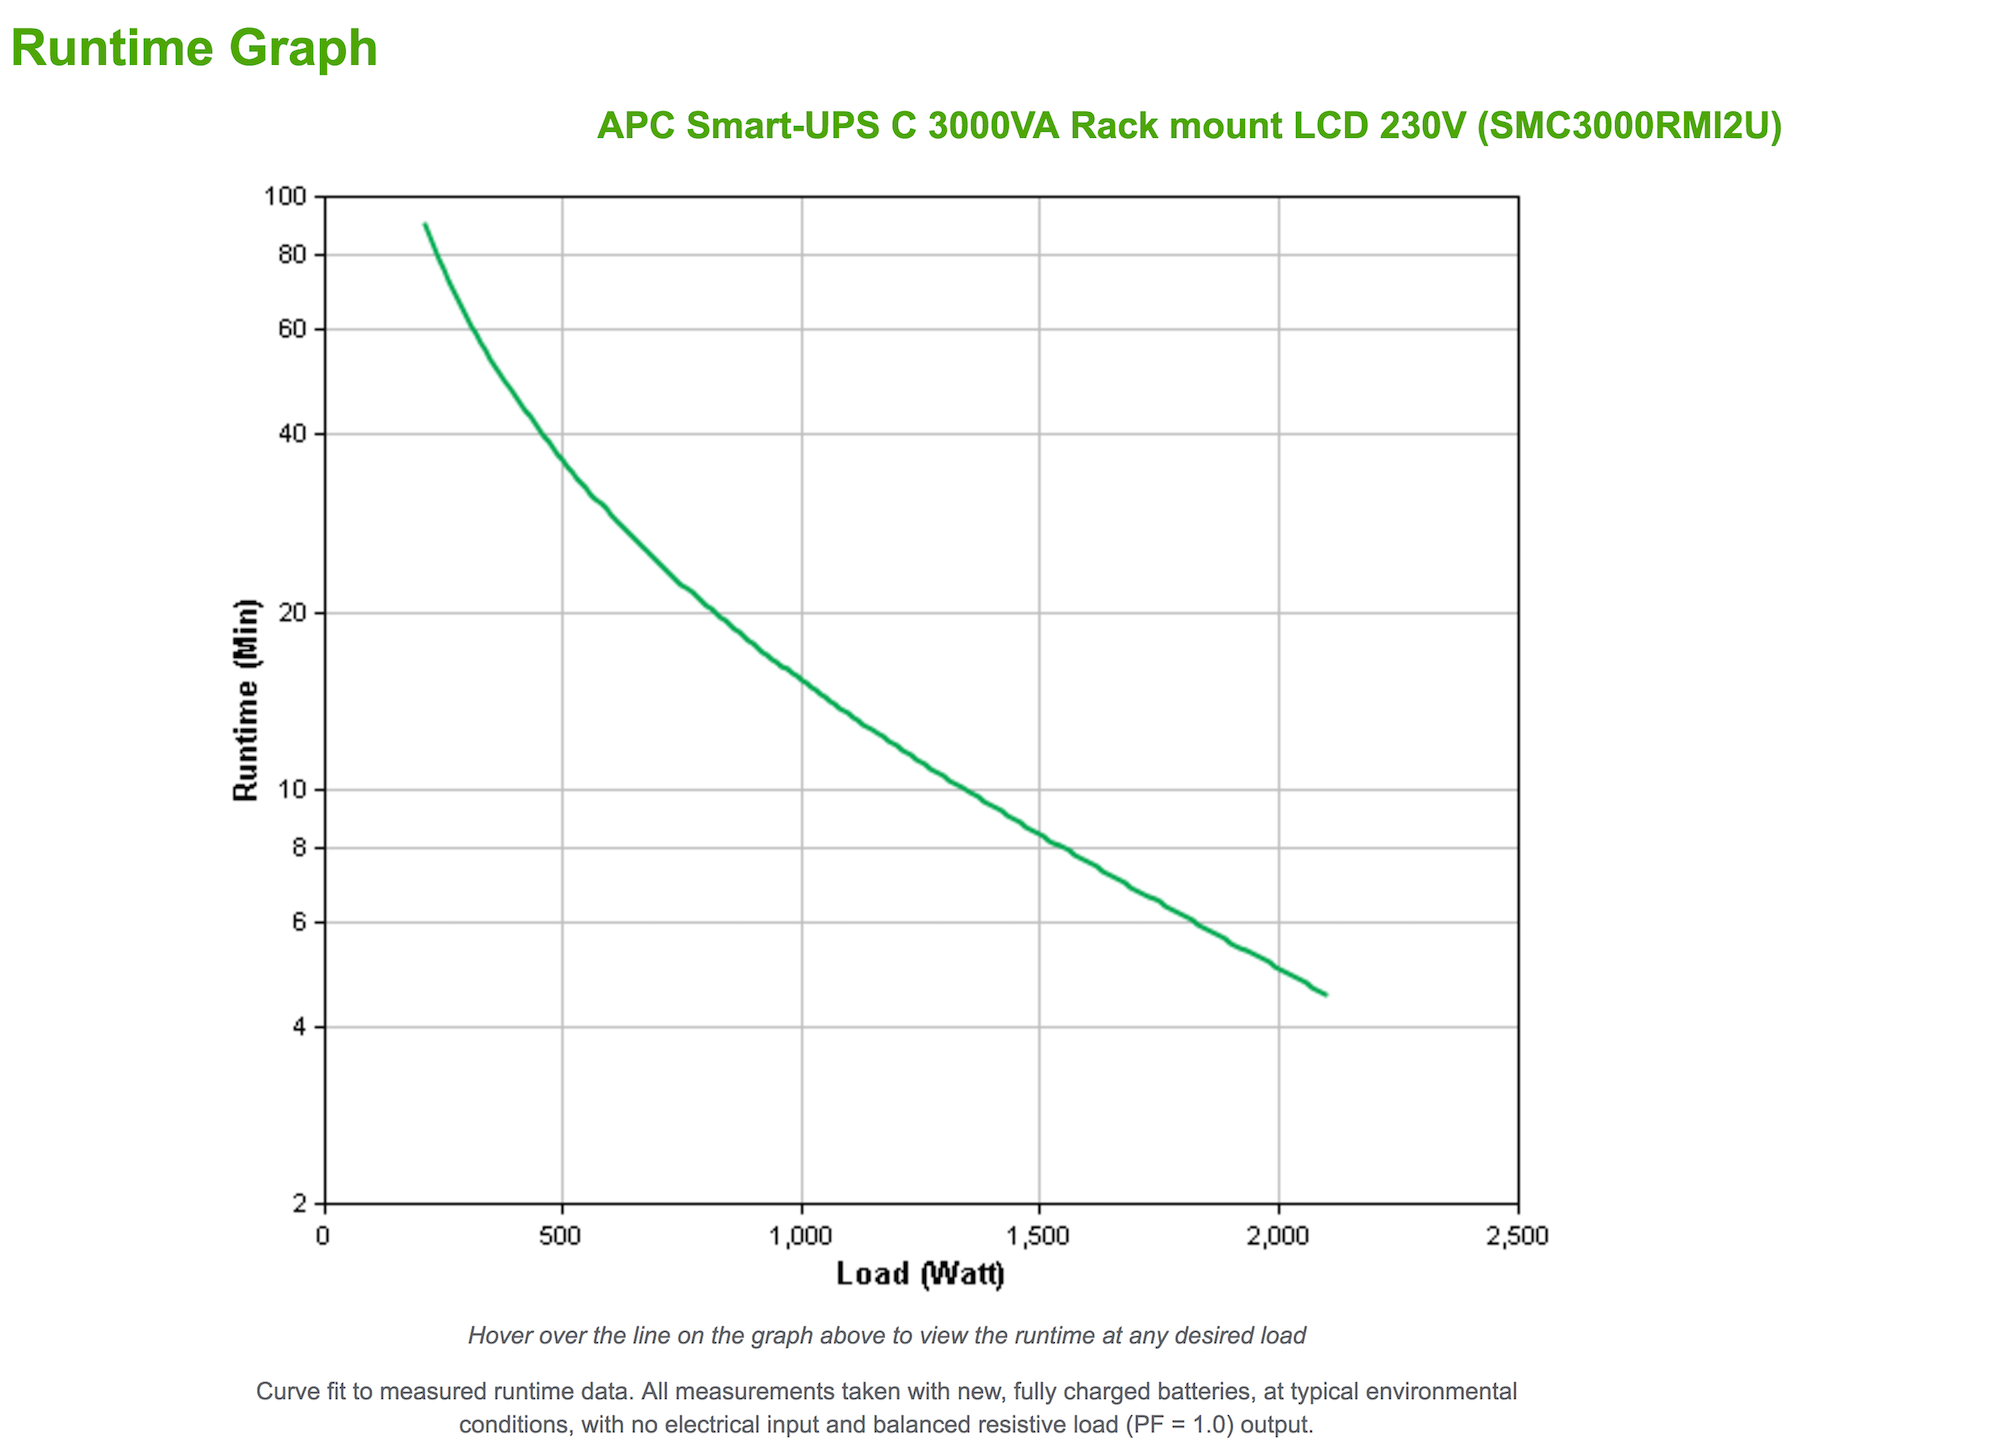 APC Smart-UPS C 3000VA 2U Rack LCD 230V SMC3000RMI2U